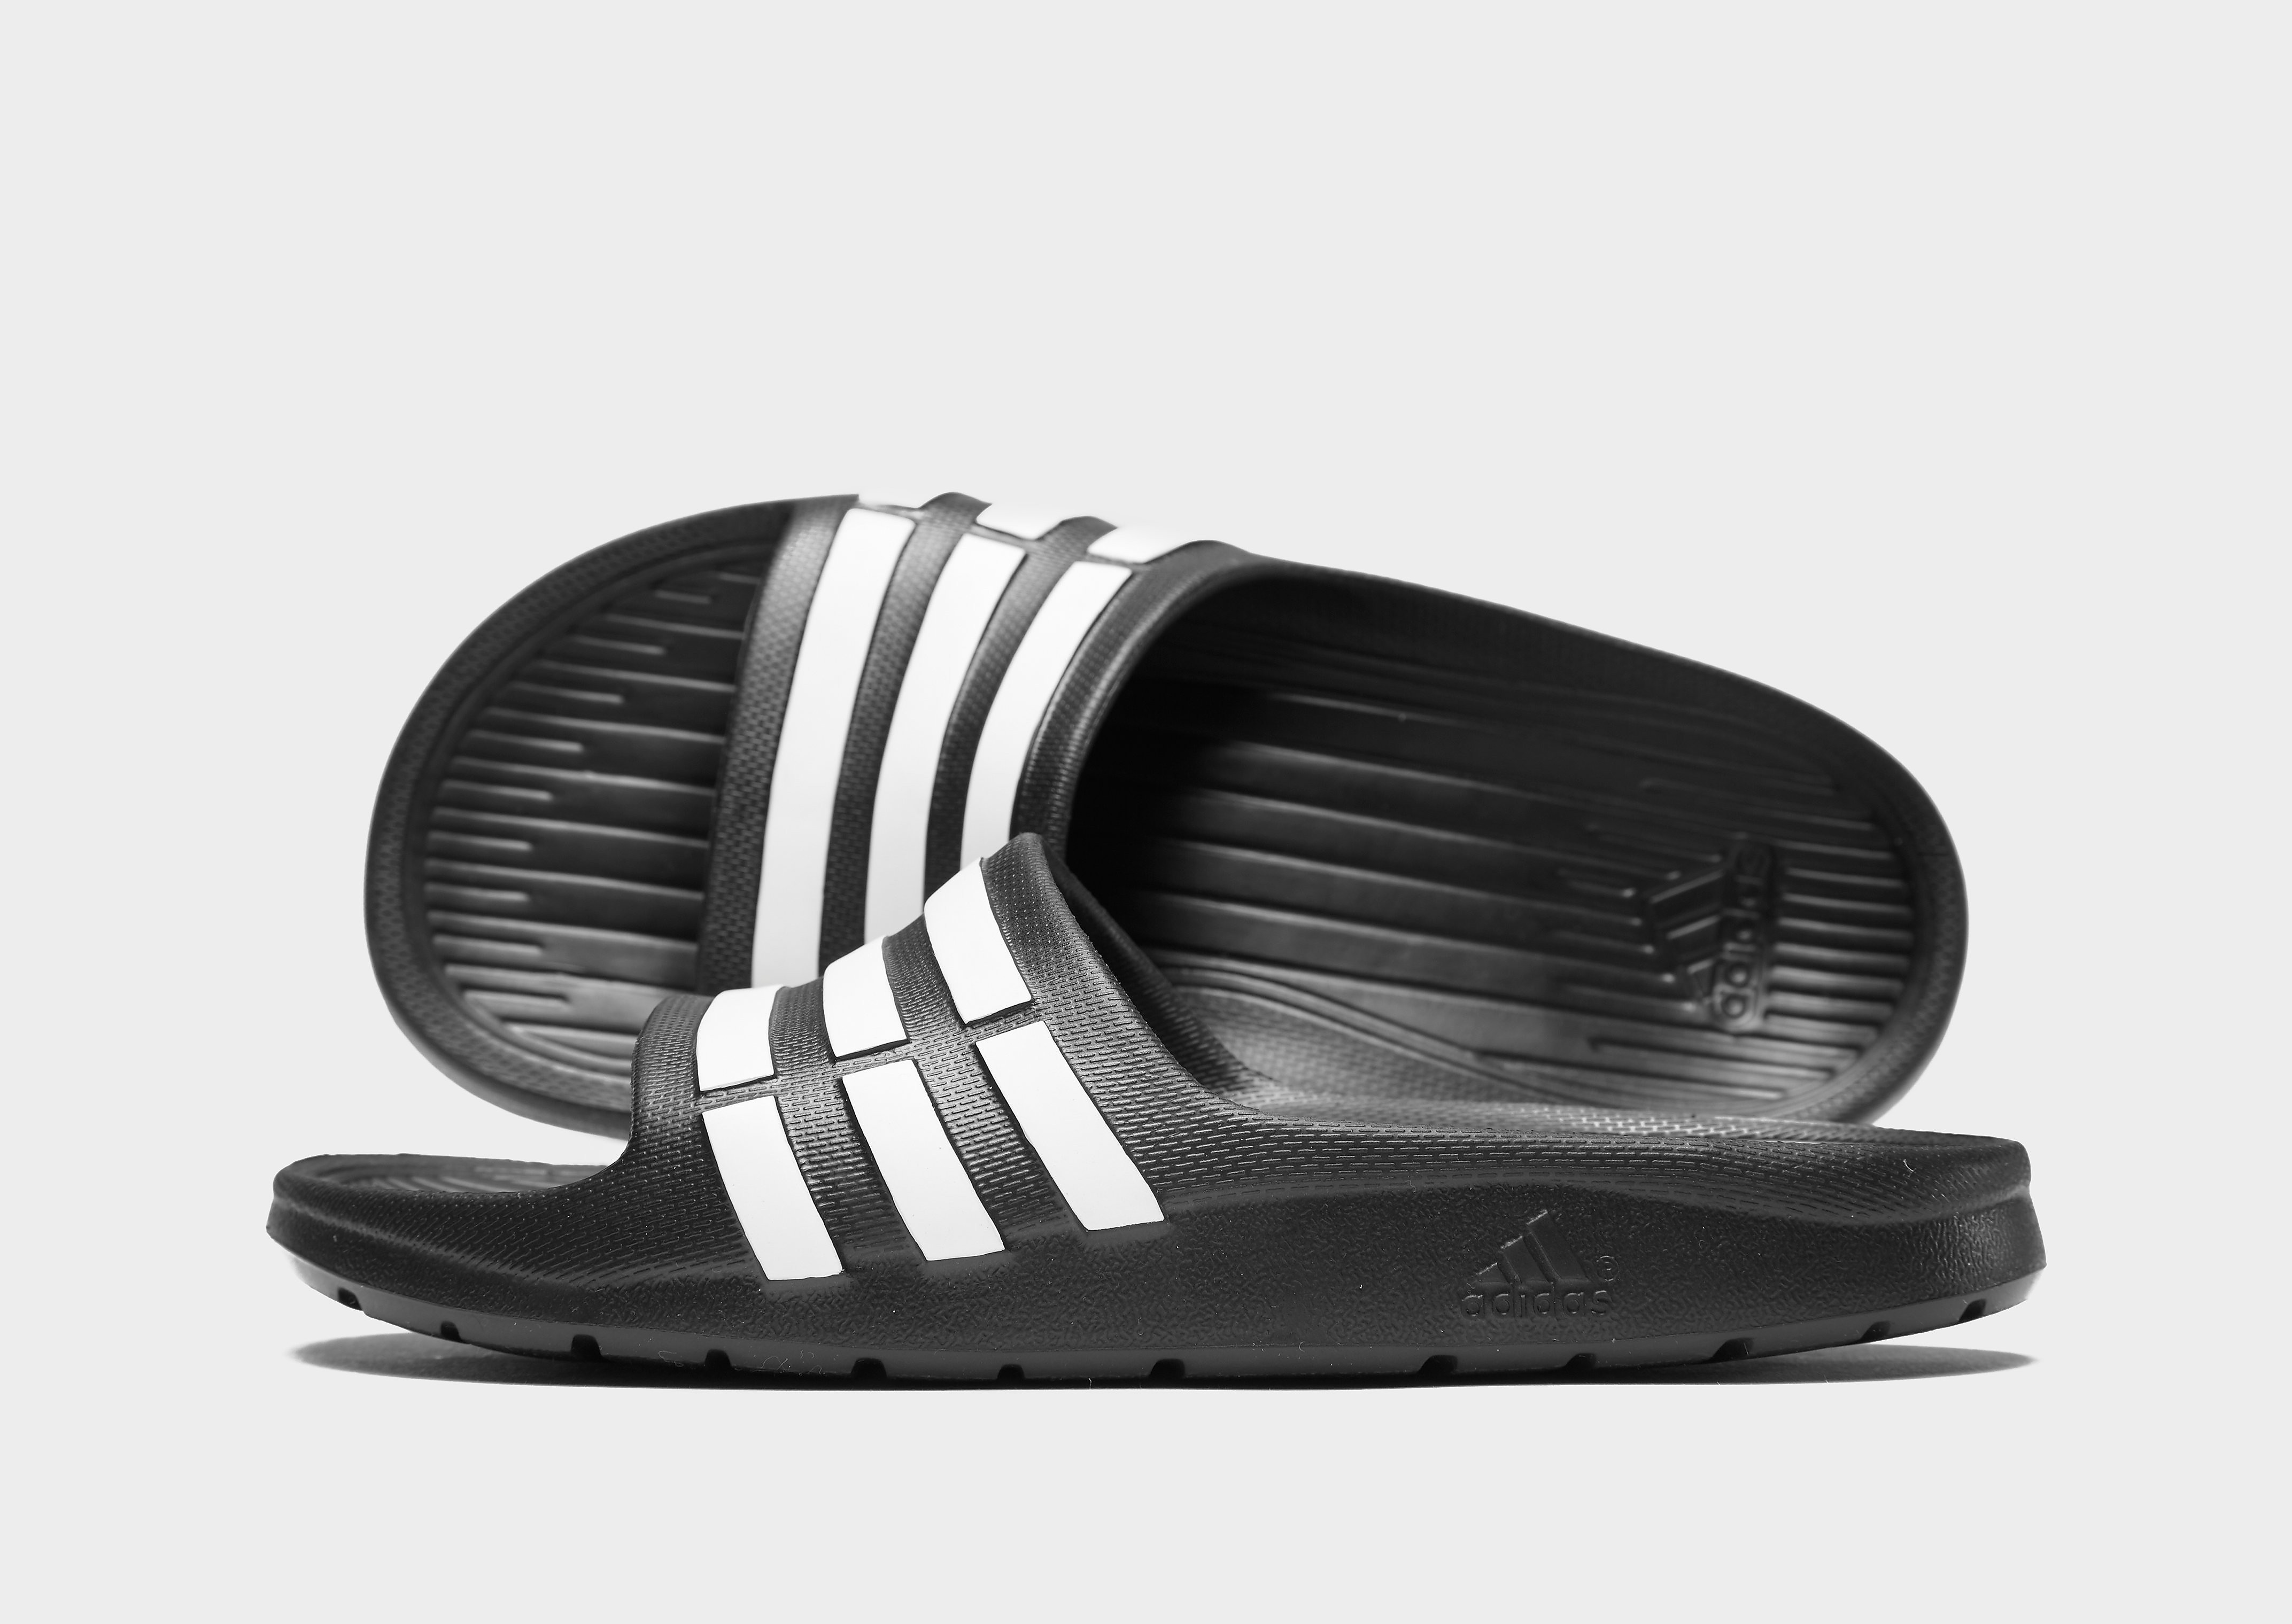 Адидас slide. Adidas Adilette Slide. Adidas Sliders. Adidas Slide. A New Version of the adidas Adilette Slide is reportedly releasing soon.